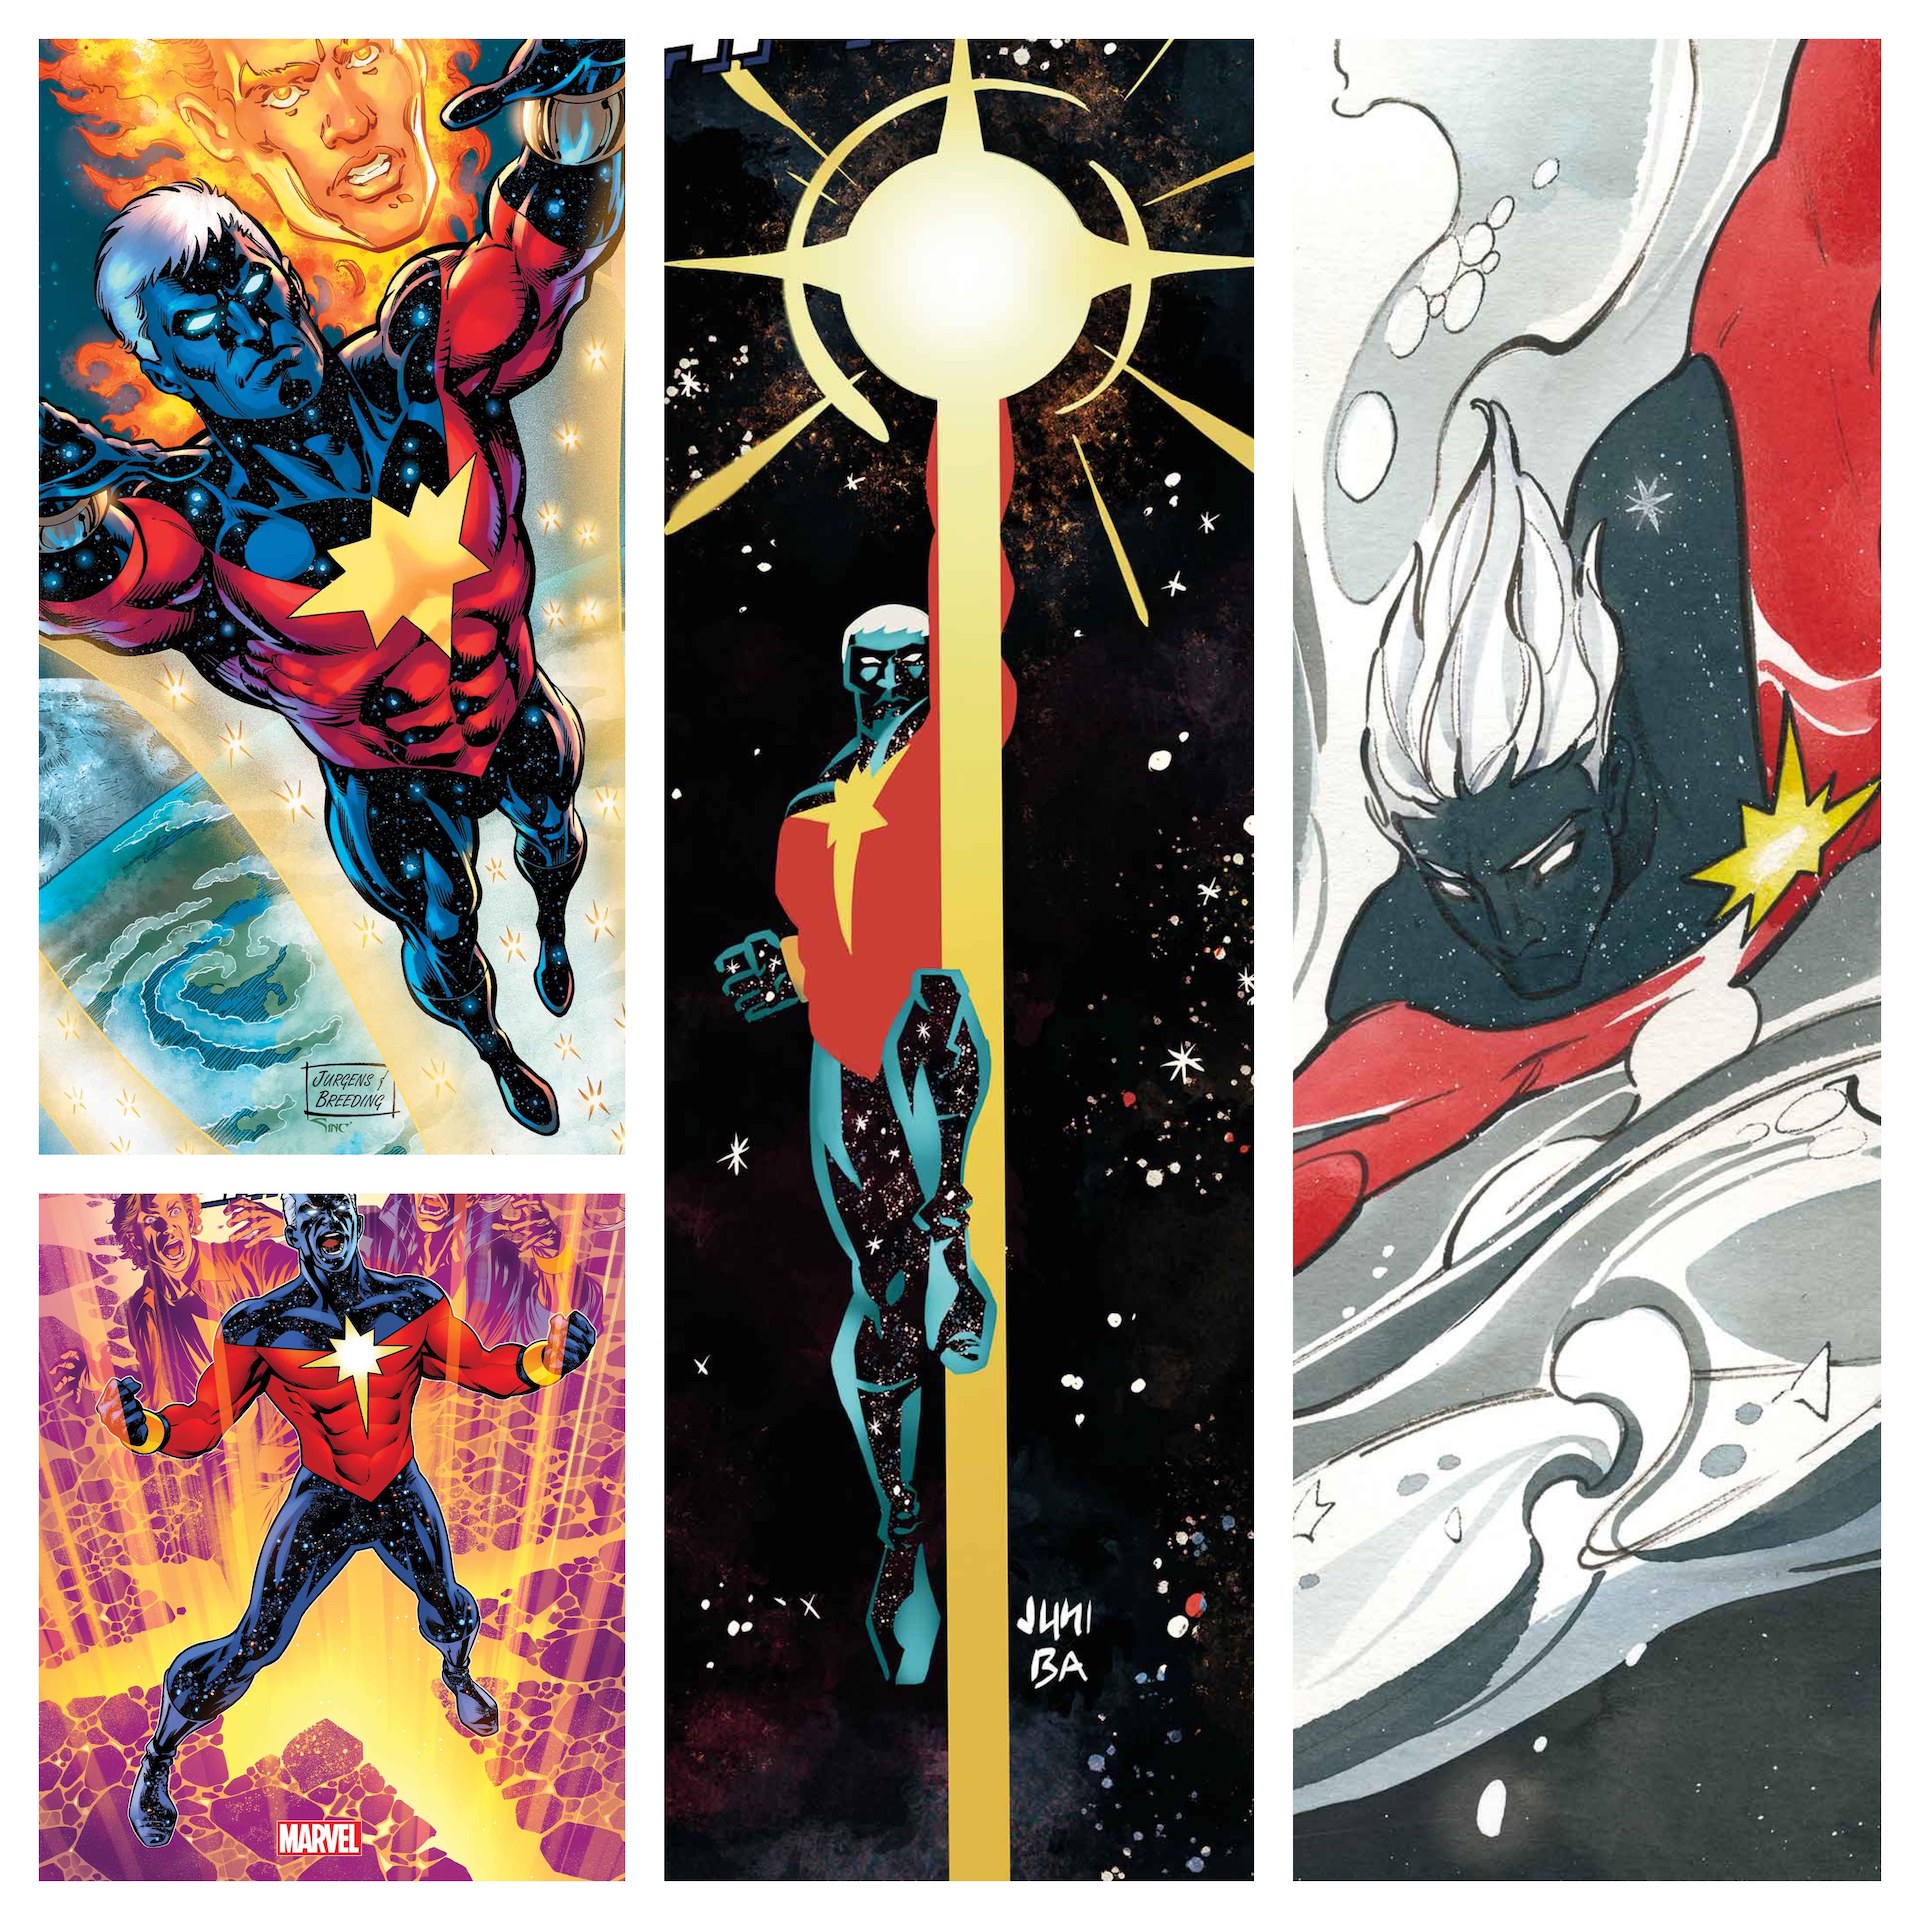 Genis-Vell returns in new 'Captain Marvel' series from Peter David